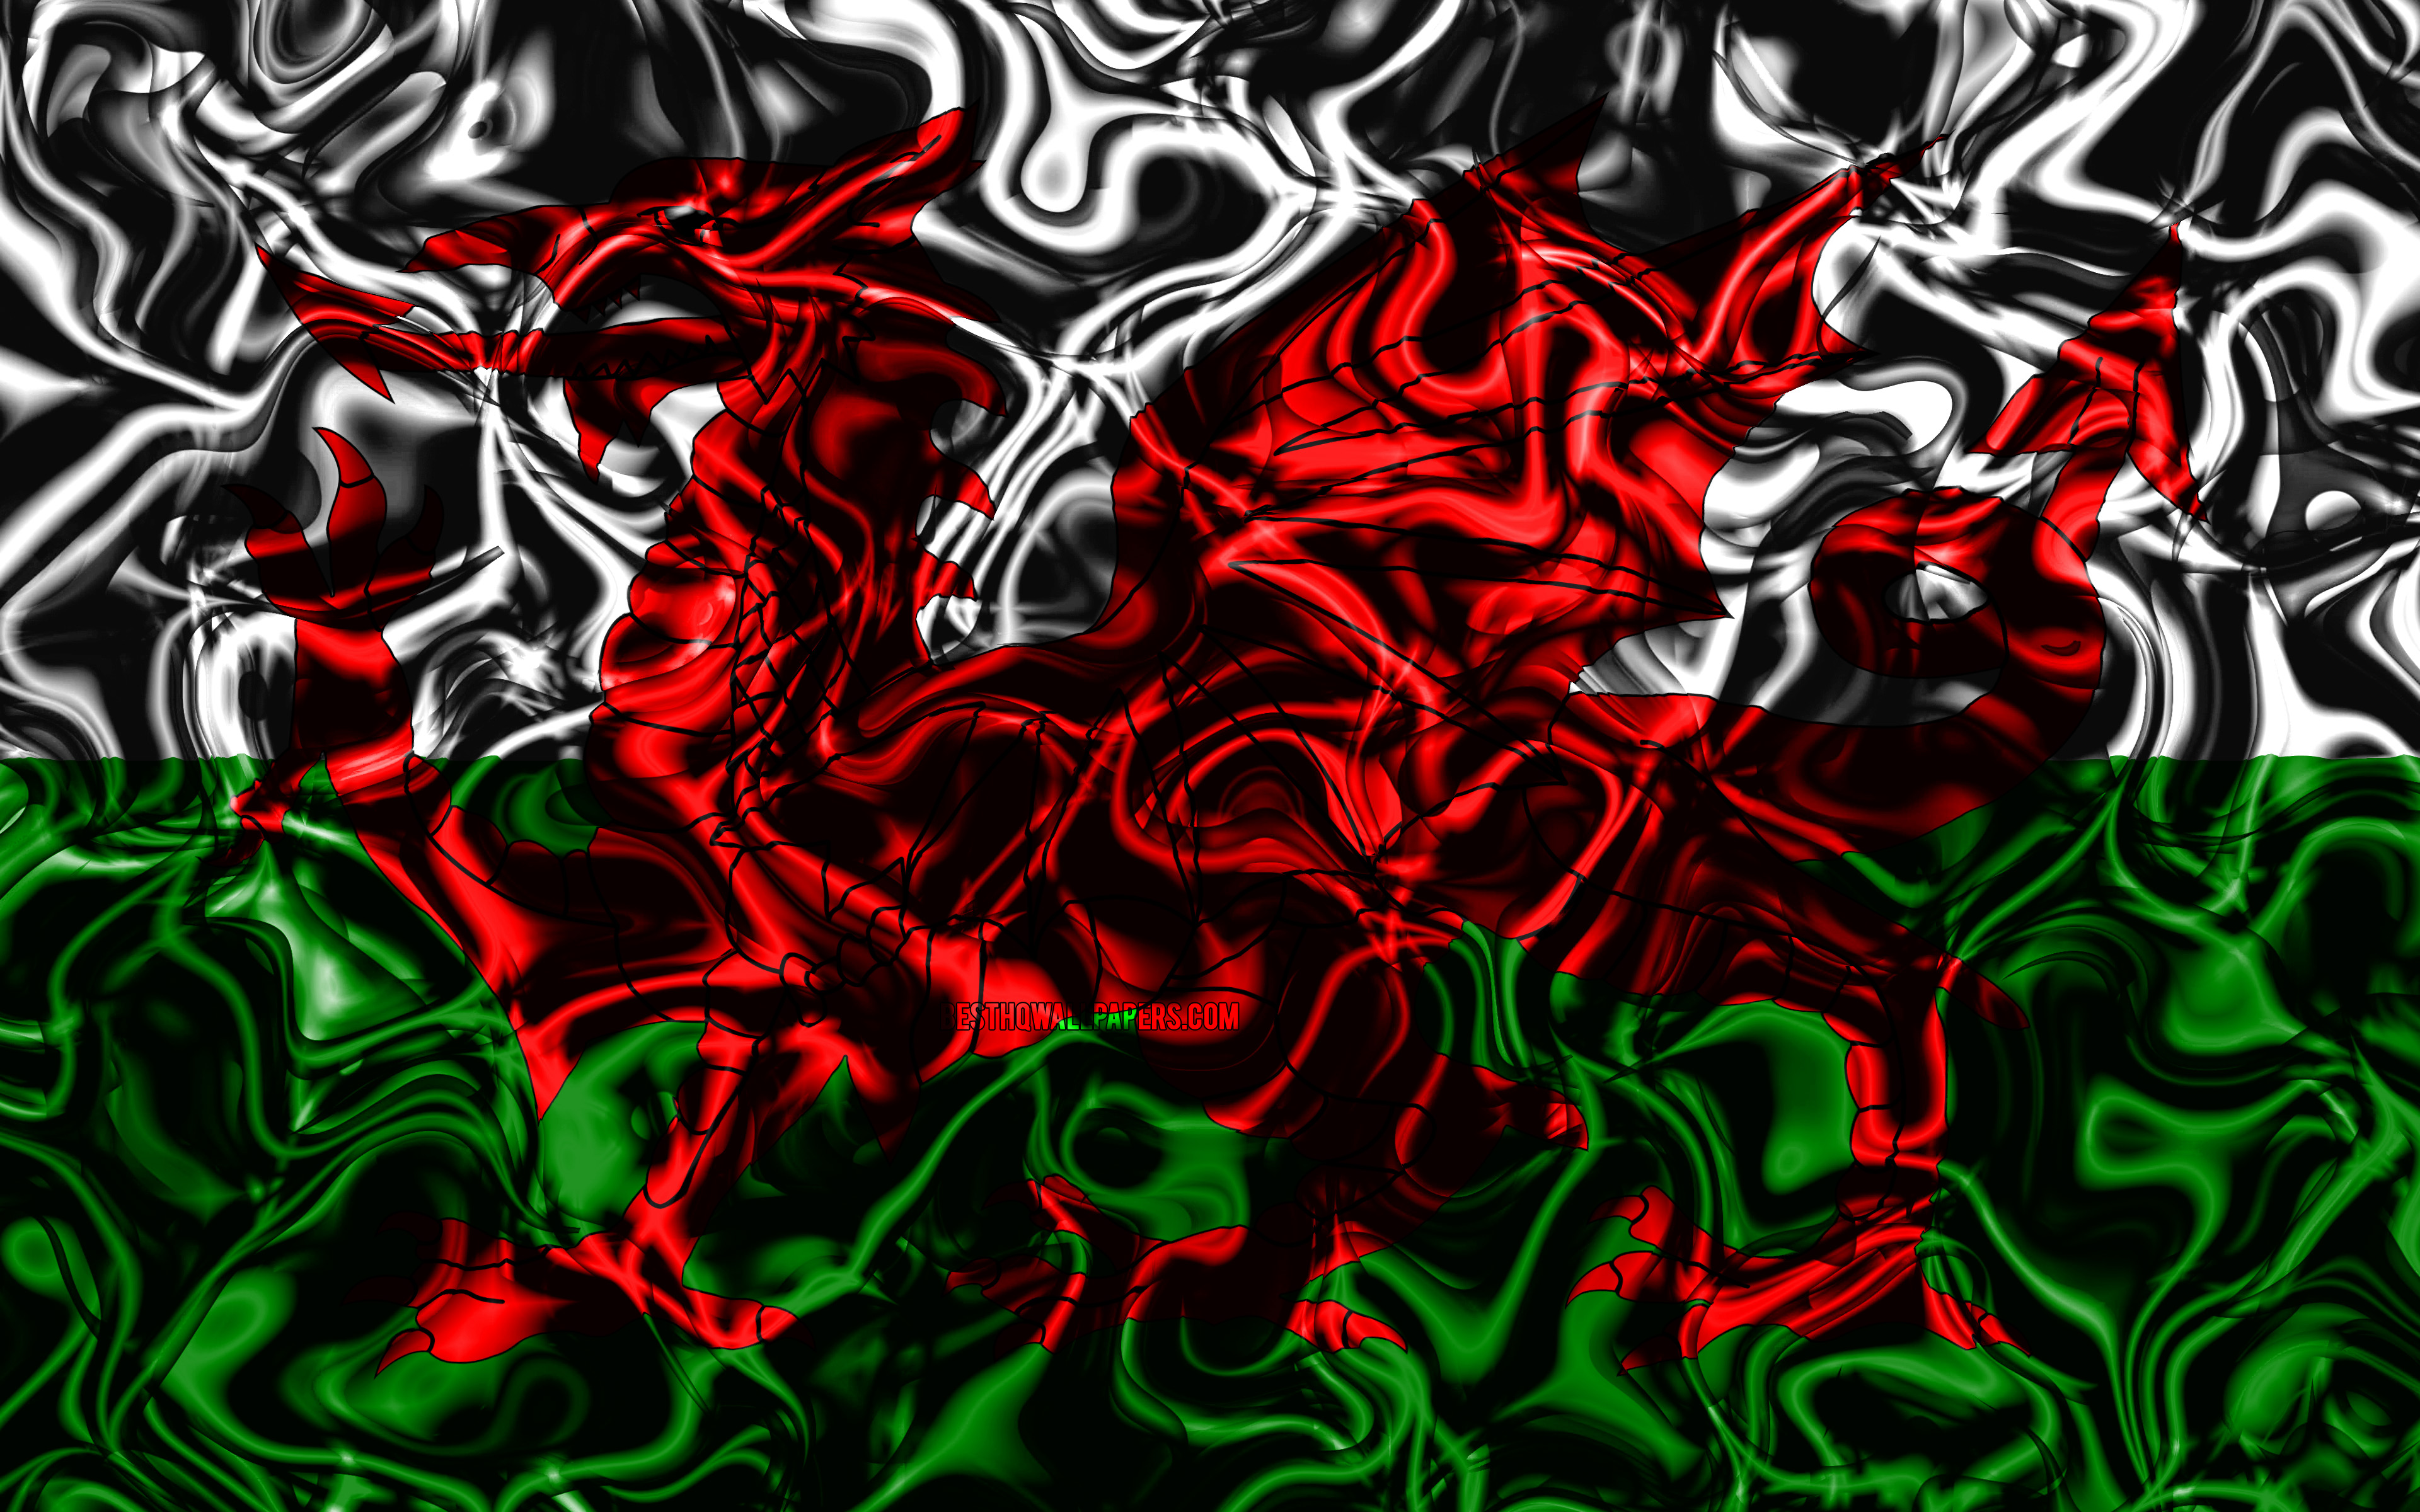 Download wallpaper 4k, Flag of Wales, abstract smoke